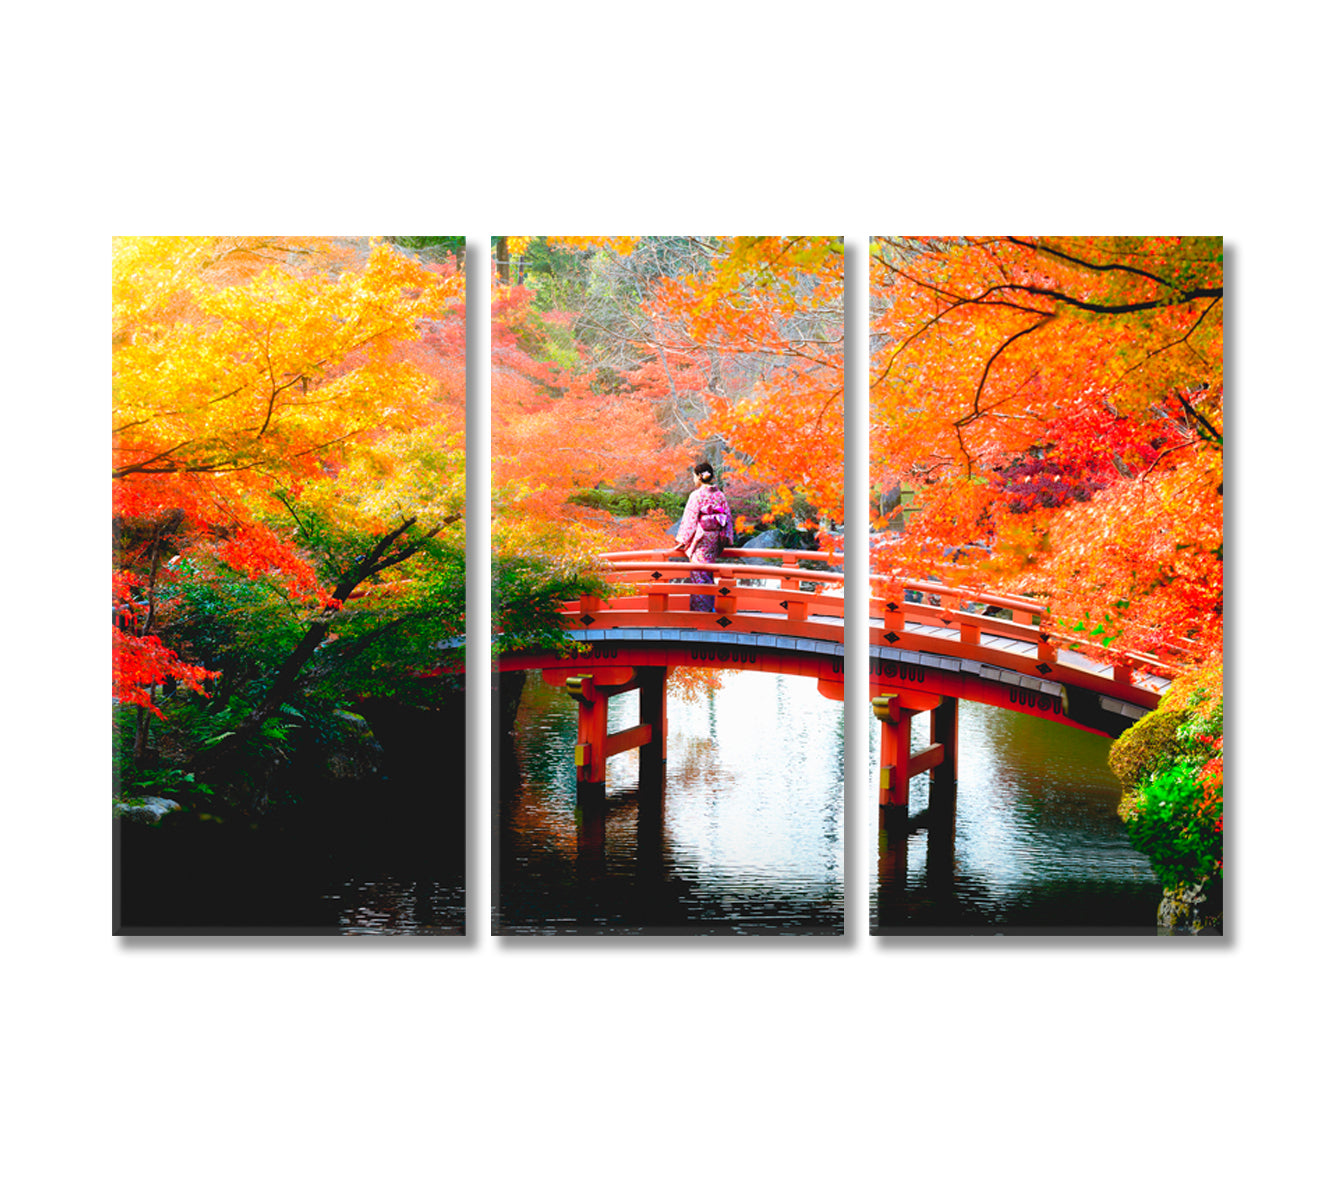 Wooden Bridge in Autumn Park Japan Canvas Print-Canvas Print-CetArt-3 Panels-36x24 inches-CetArt